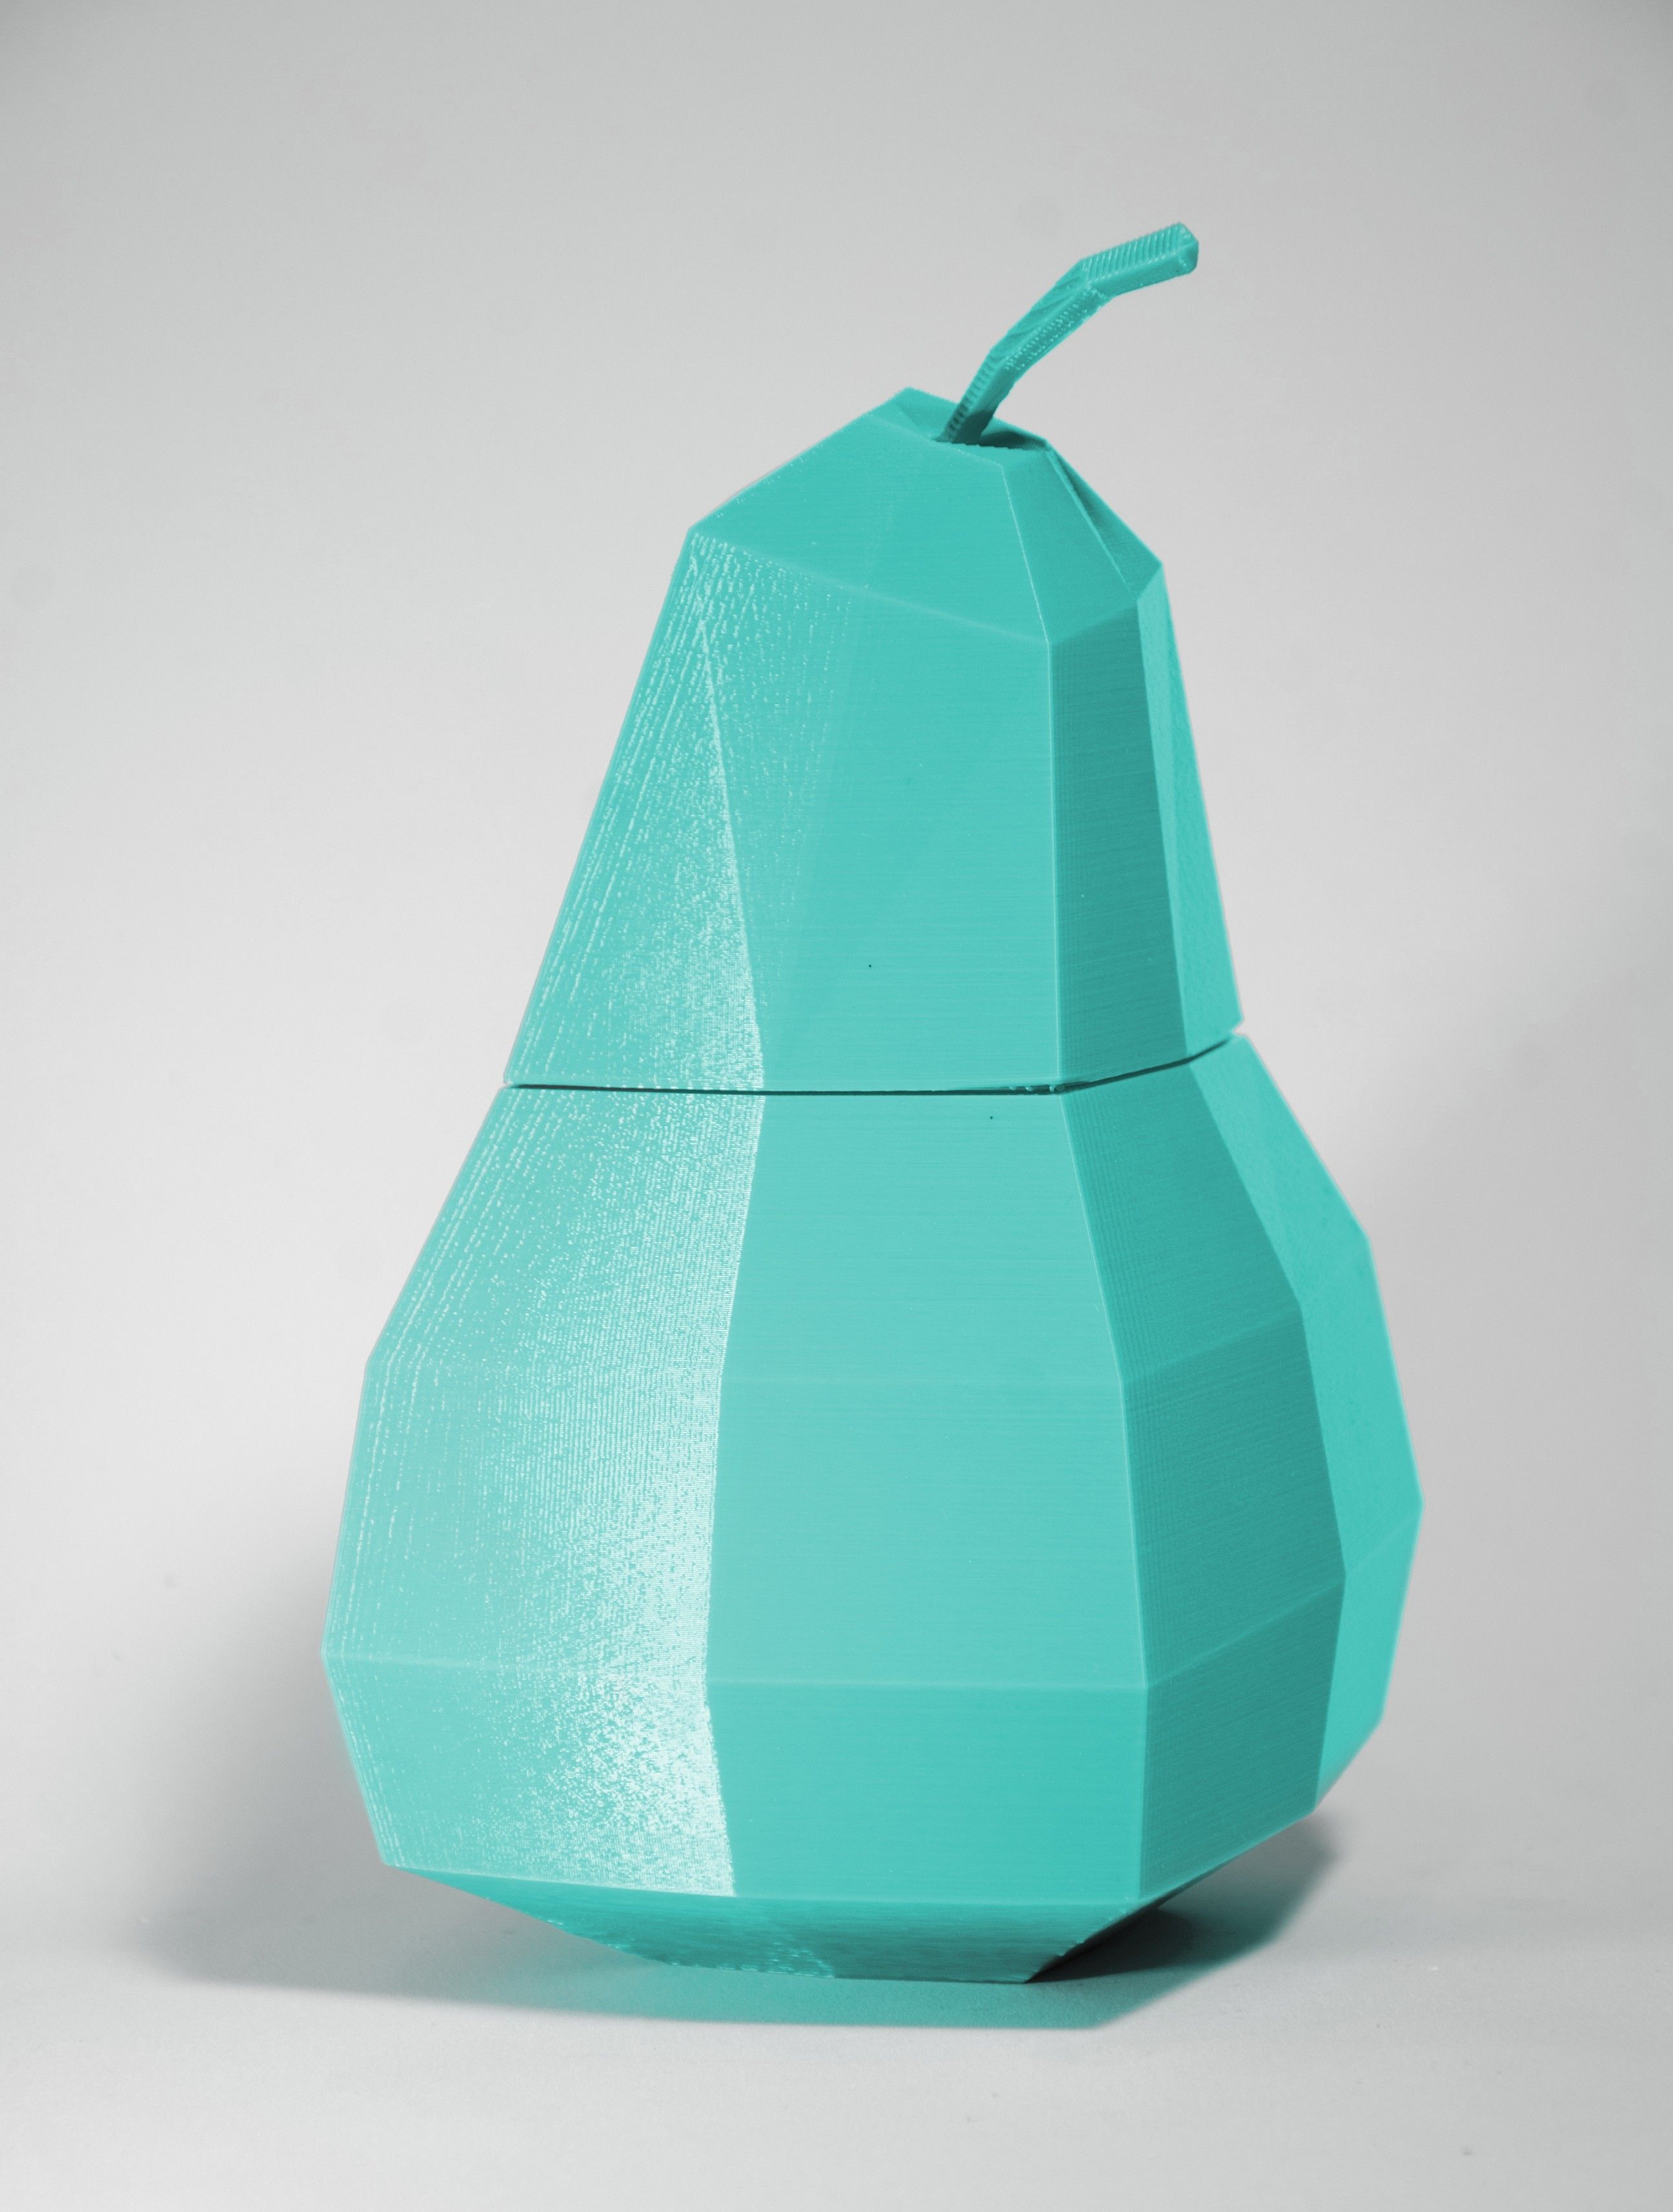 Grusha 3.jpg Download free STL file Pear Casket • 3D print object, KuKu